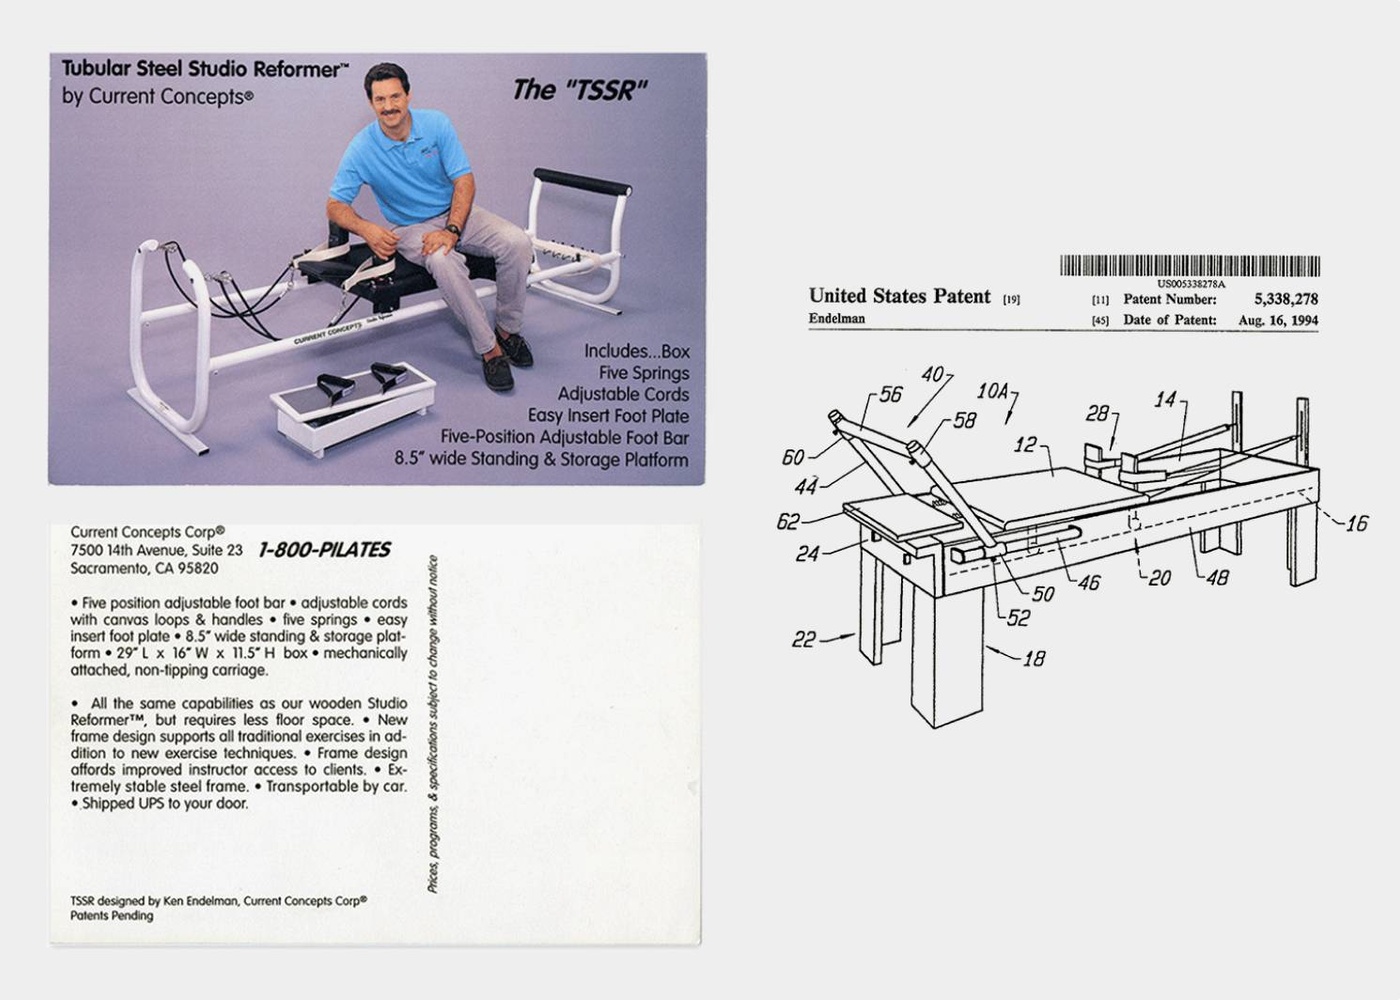 Ken's first patent